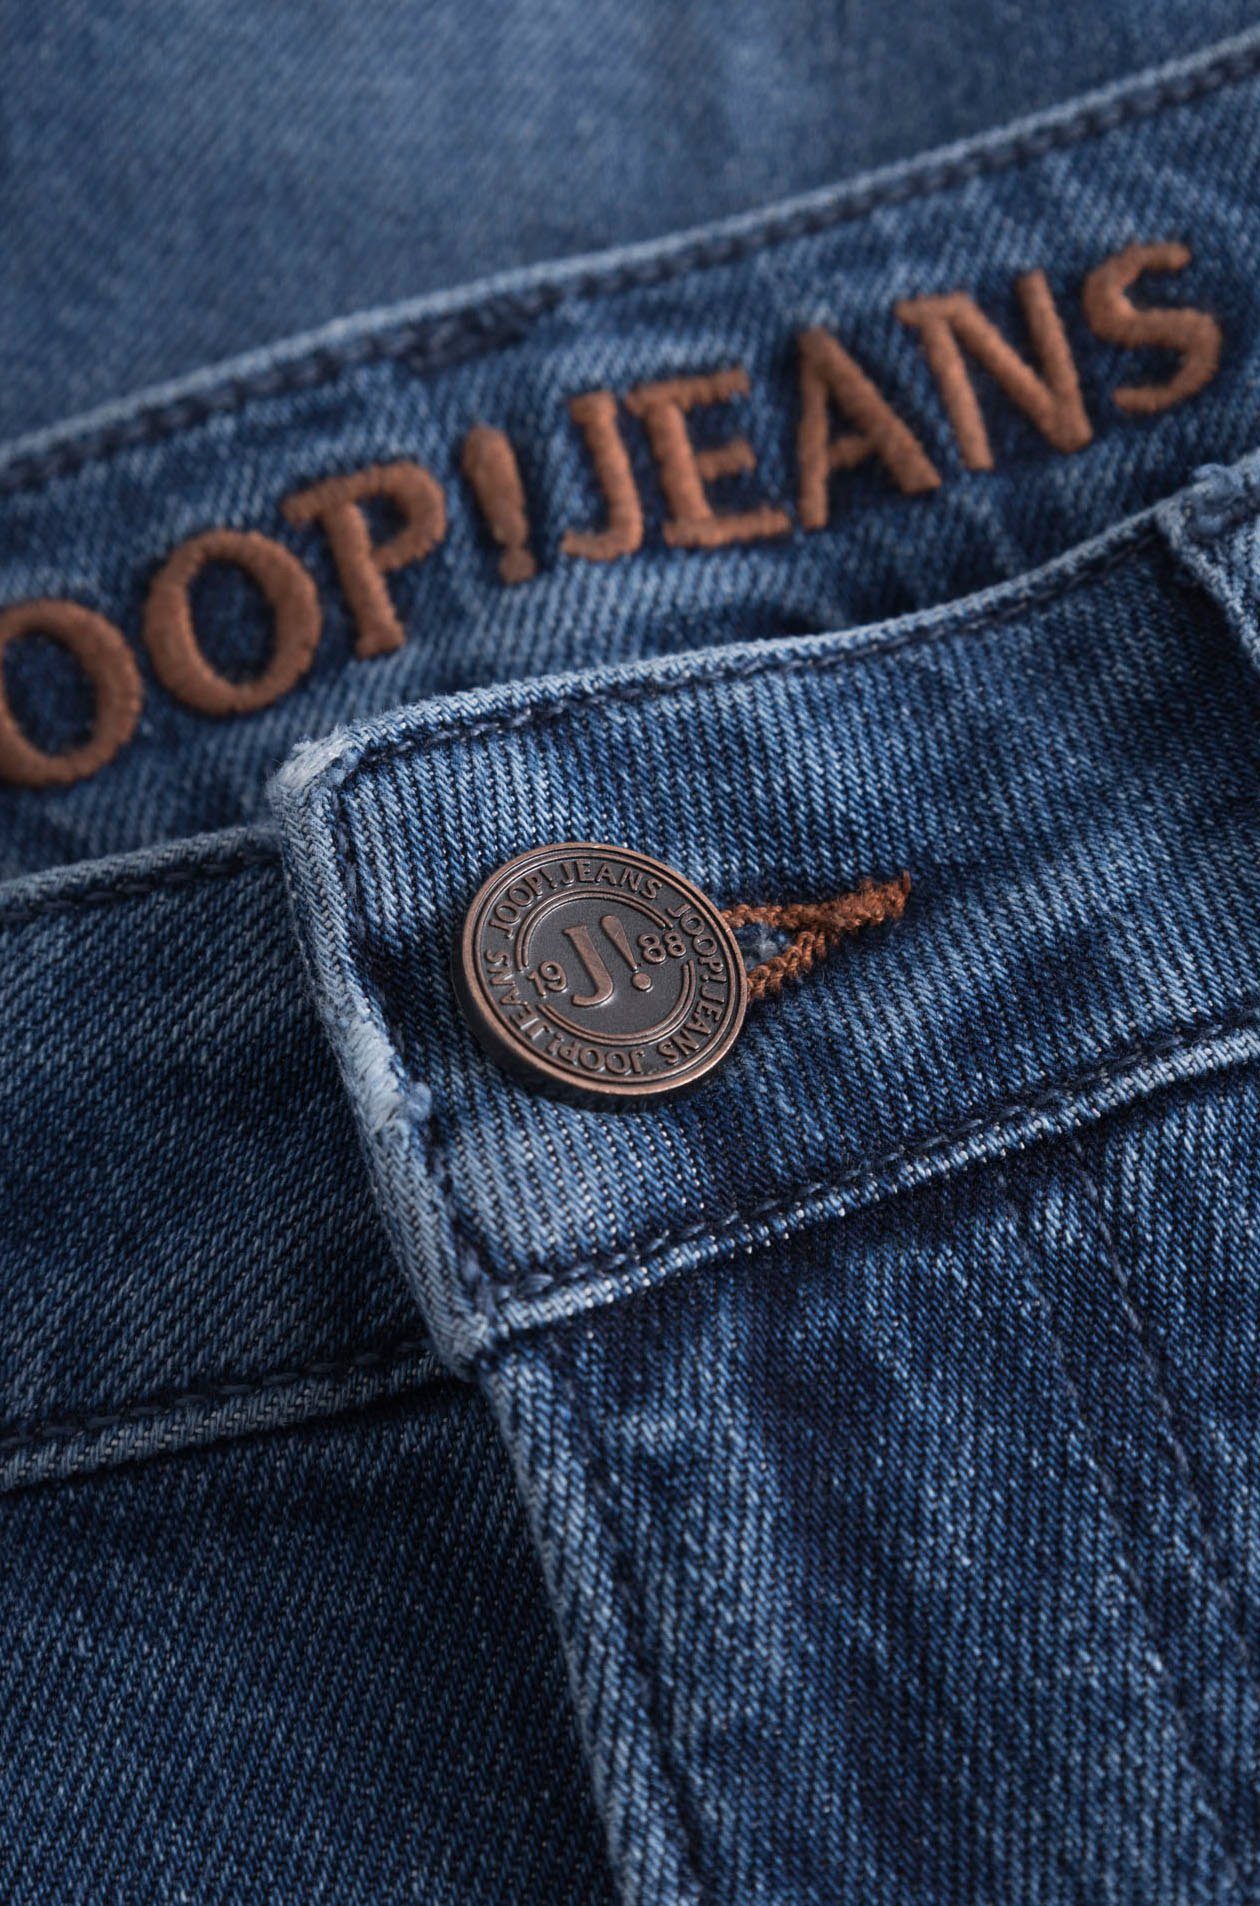 Jeans Form Straight-Jeans Joop in 5-Pocket